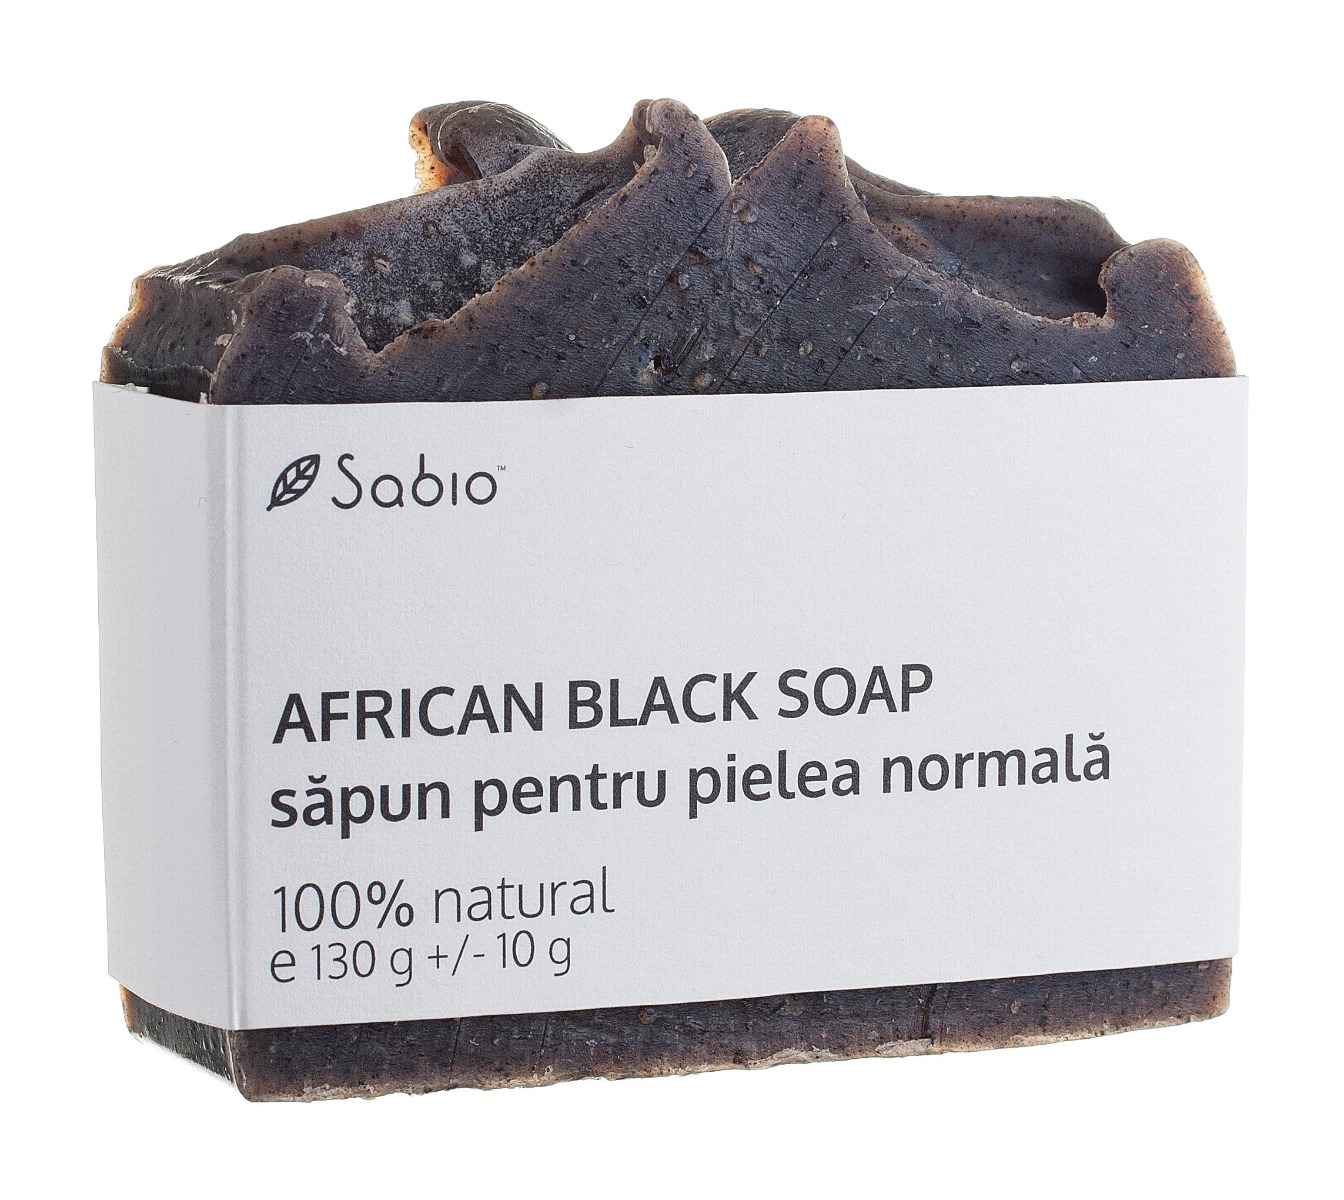 Sapun natural pentru pielea normala African Black Soap, 130g, Sabio